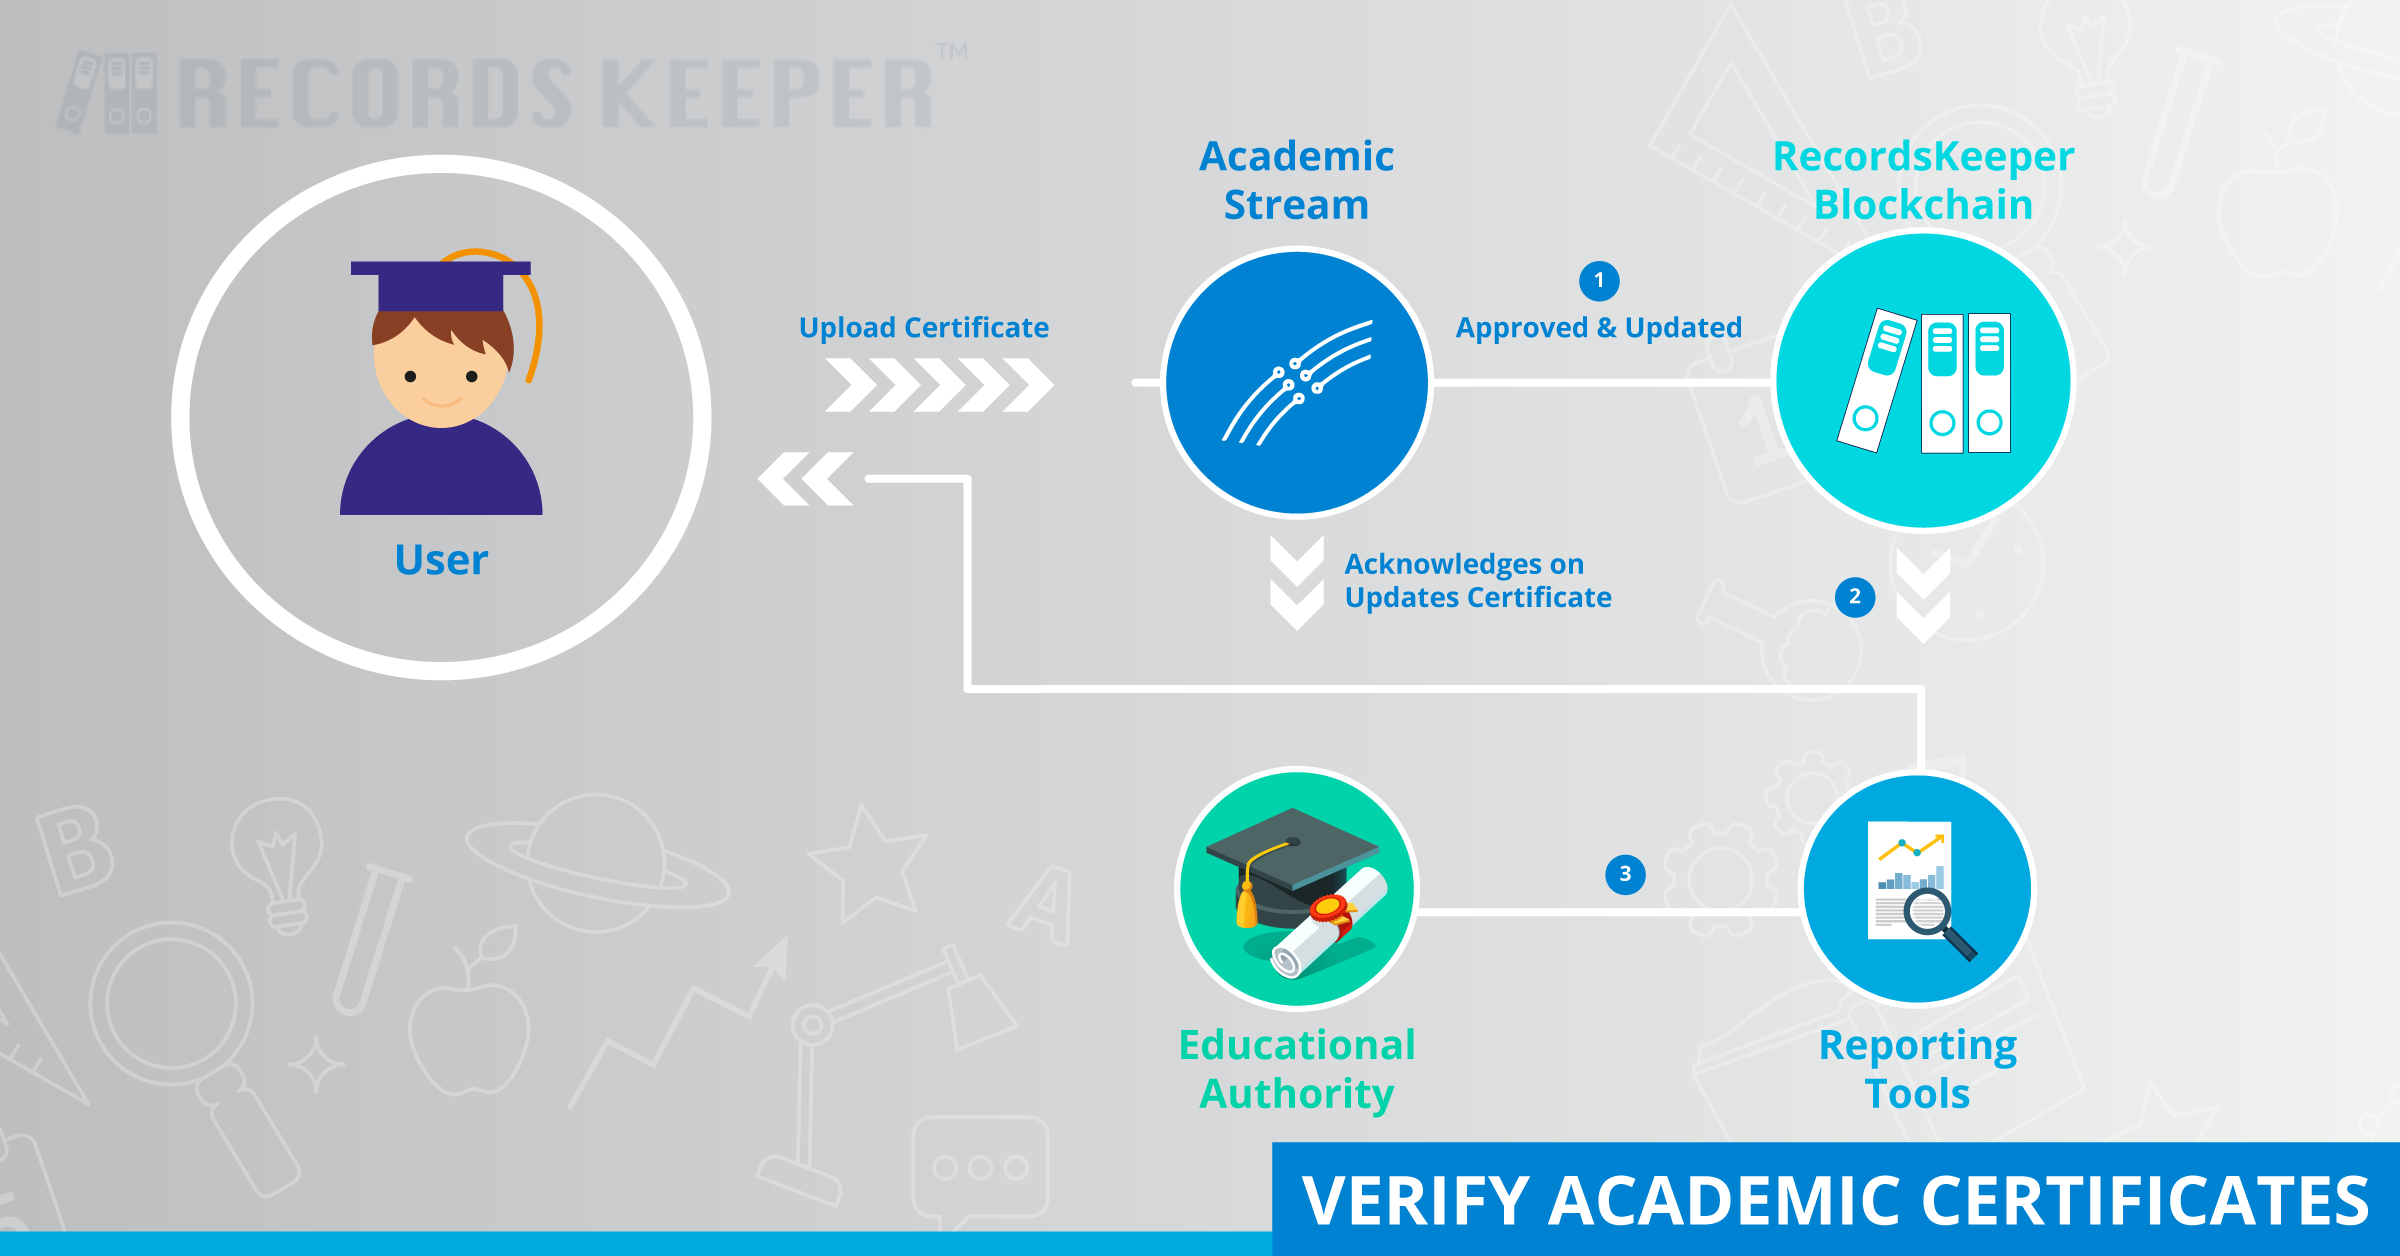 _images/Verify-Academic-Certificates.png